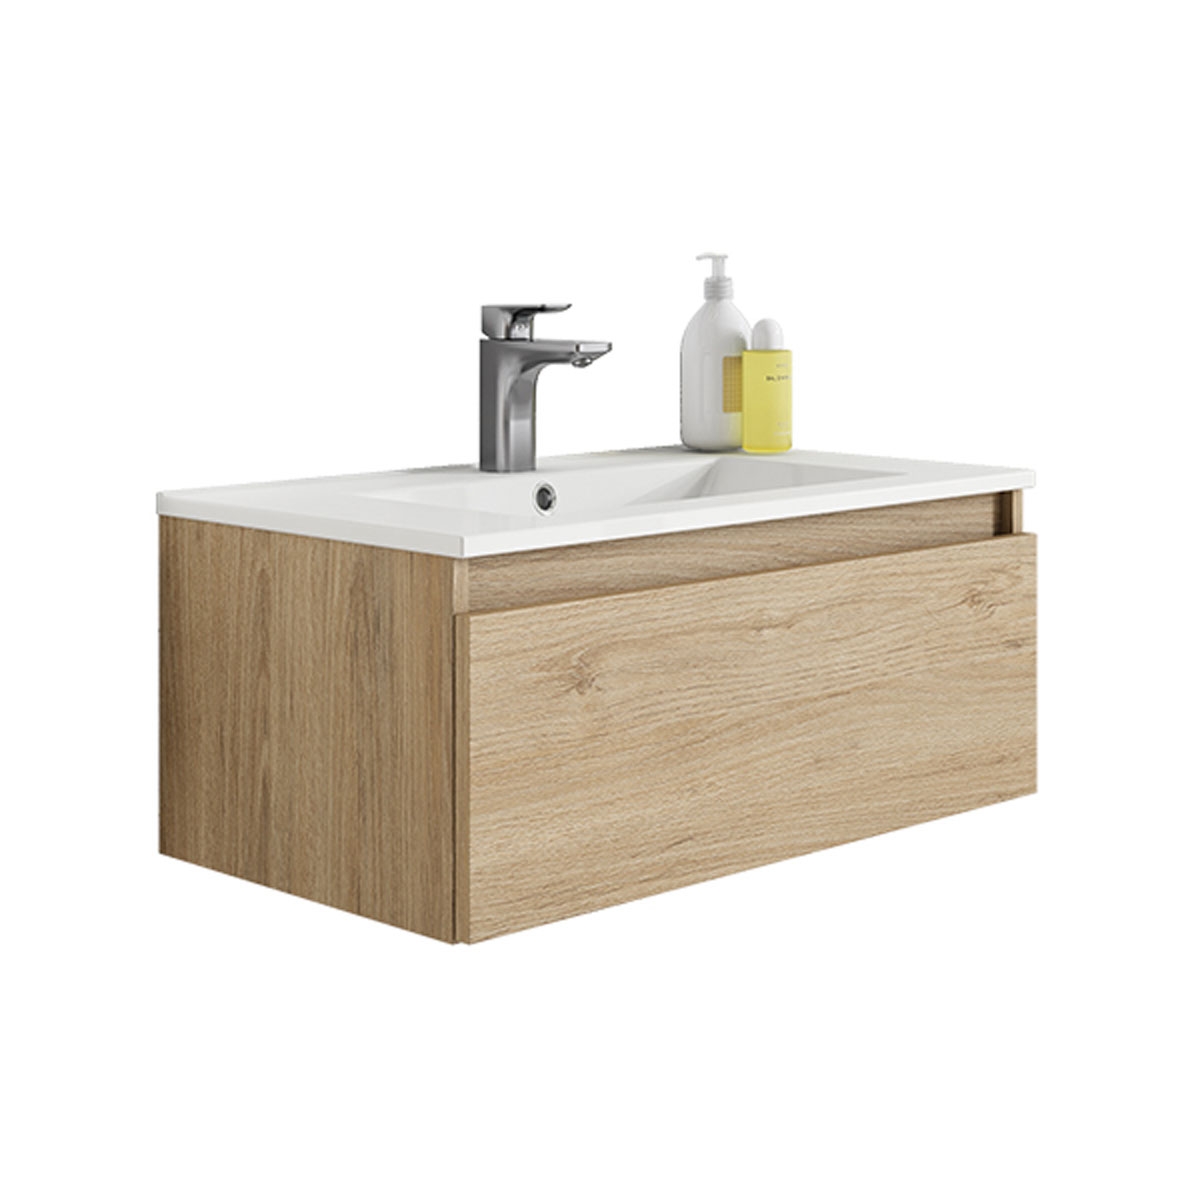 Mueble de baño suspendido con lavabo integrado Modelo Box5